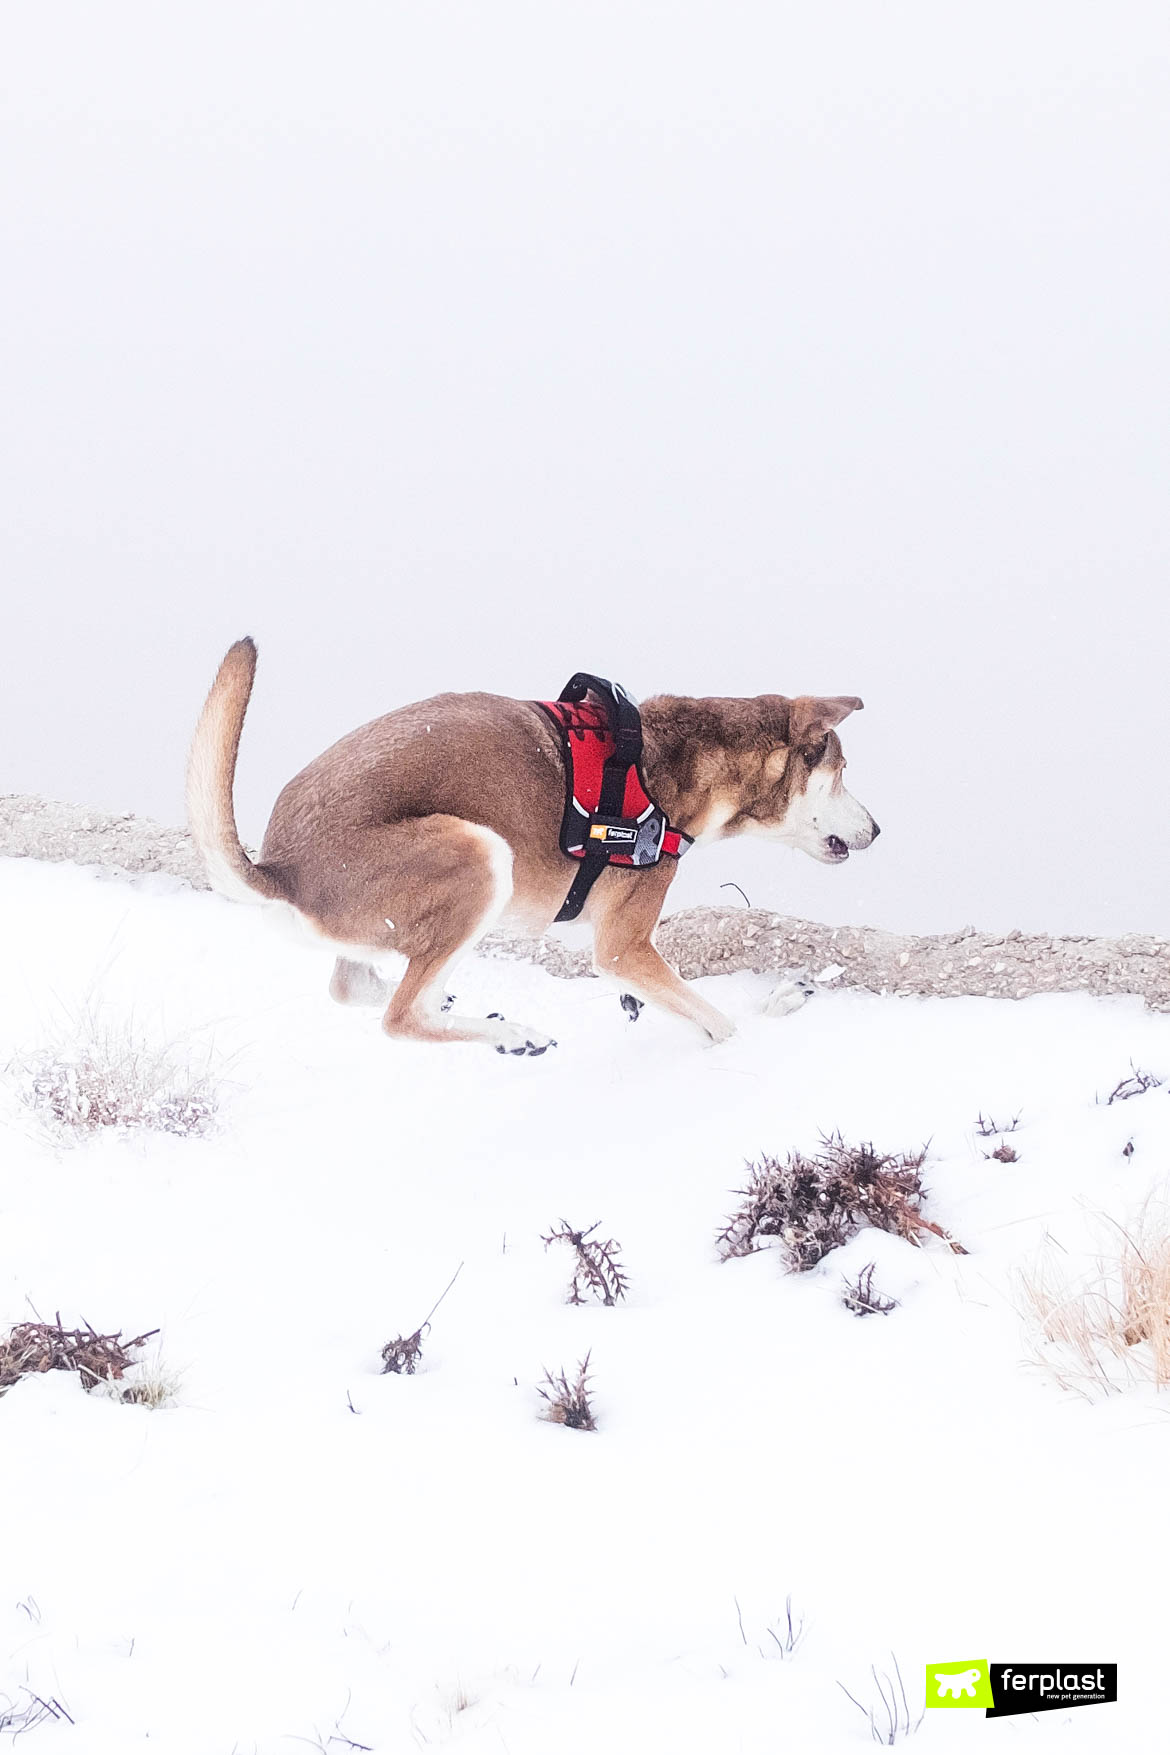 10 Fun Winter Dog Activities